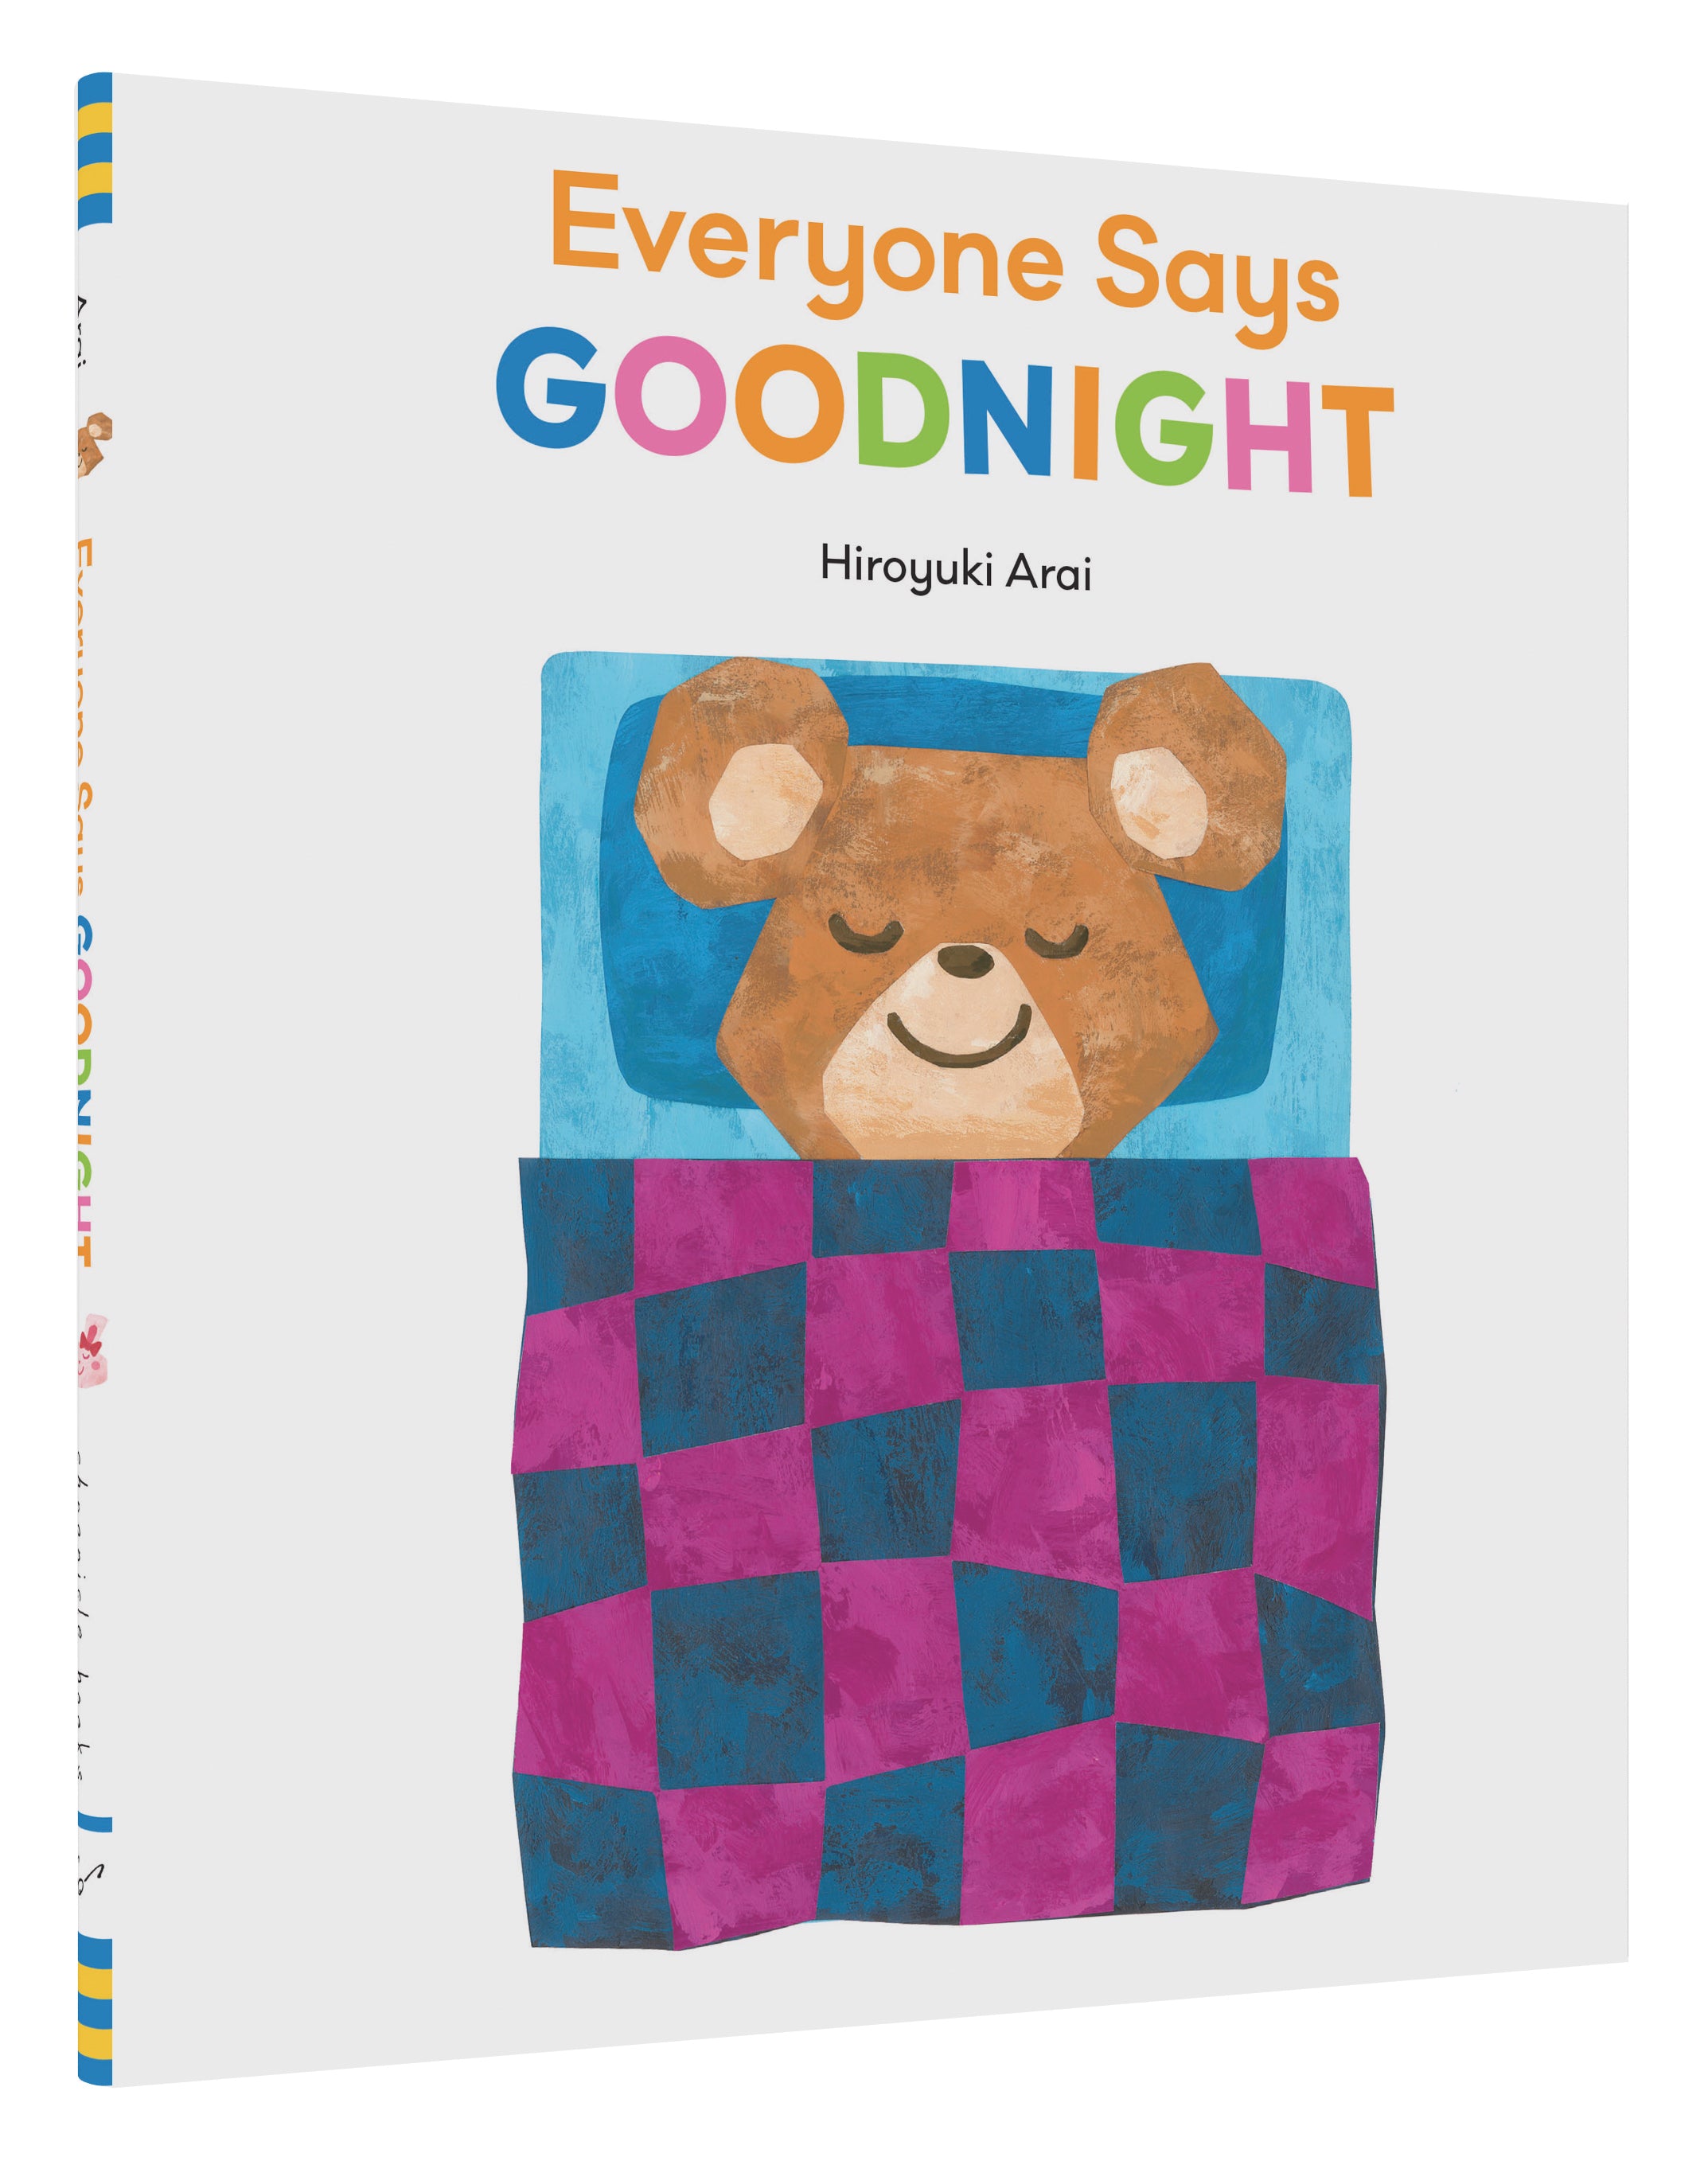 Everyone Says Goodnight by Hiroyuki Arai